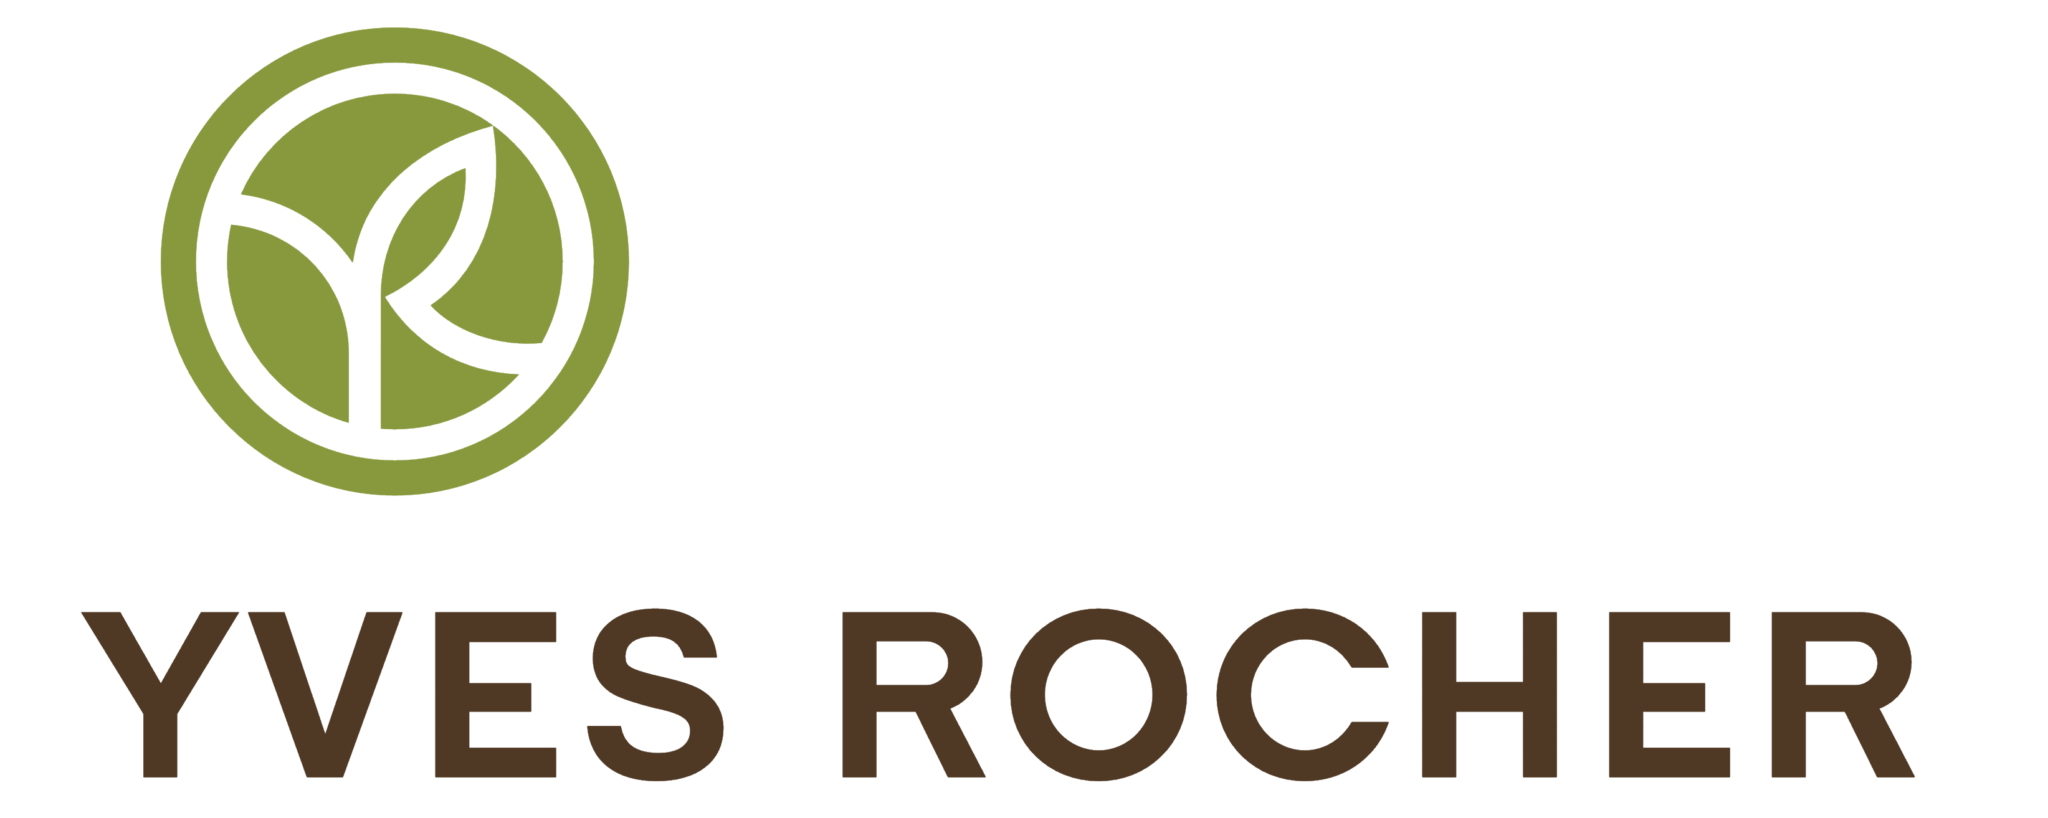 Yves_Rocher_logo_wordmark